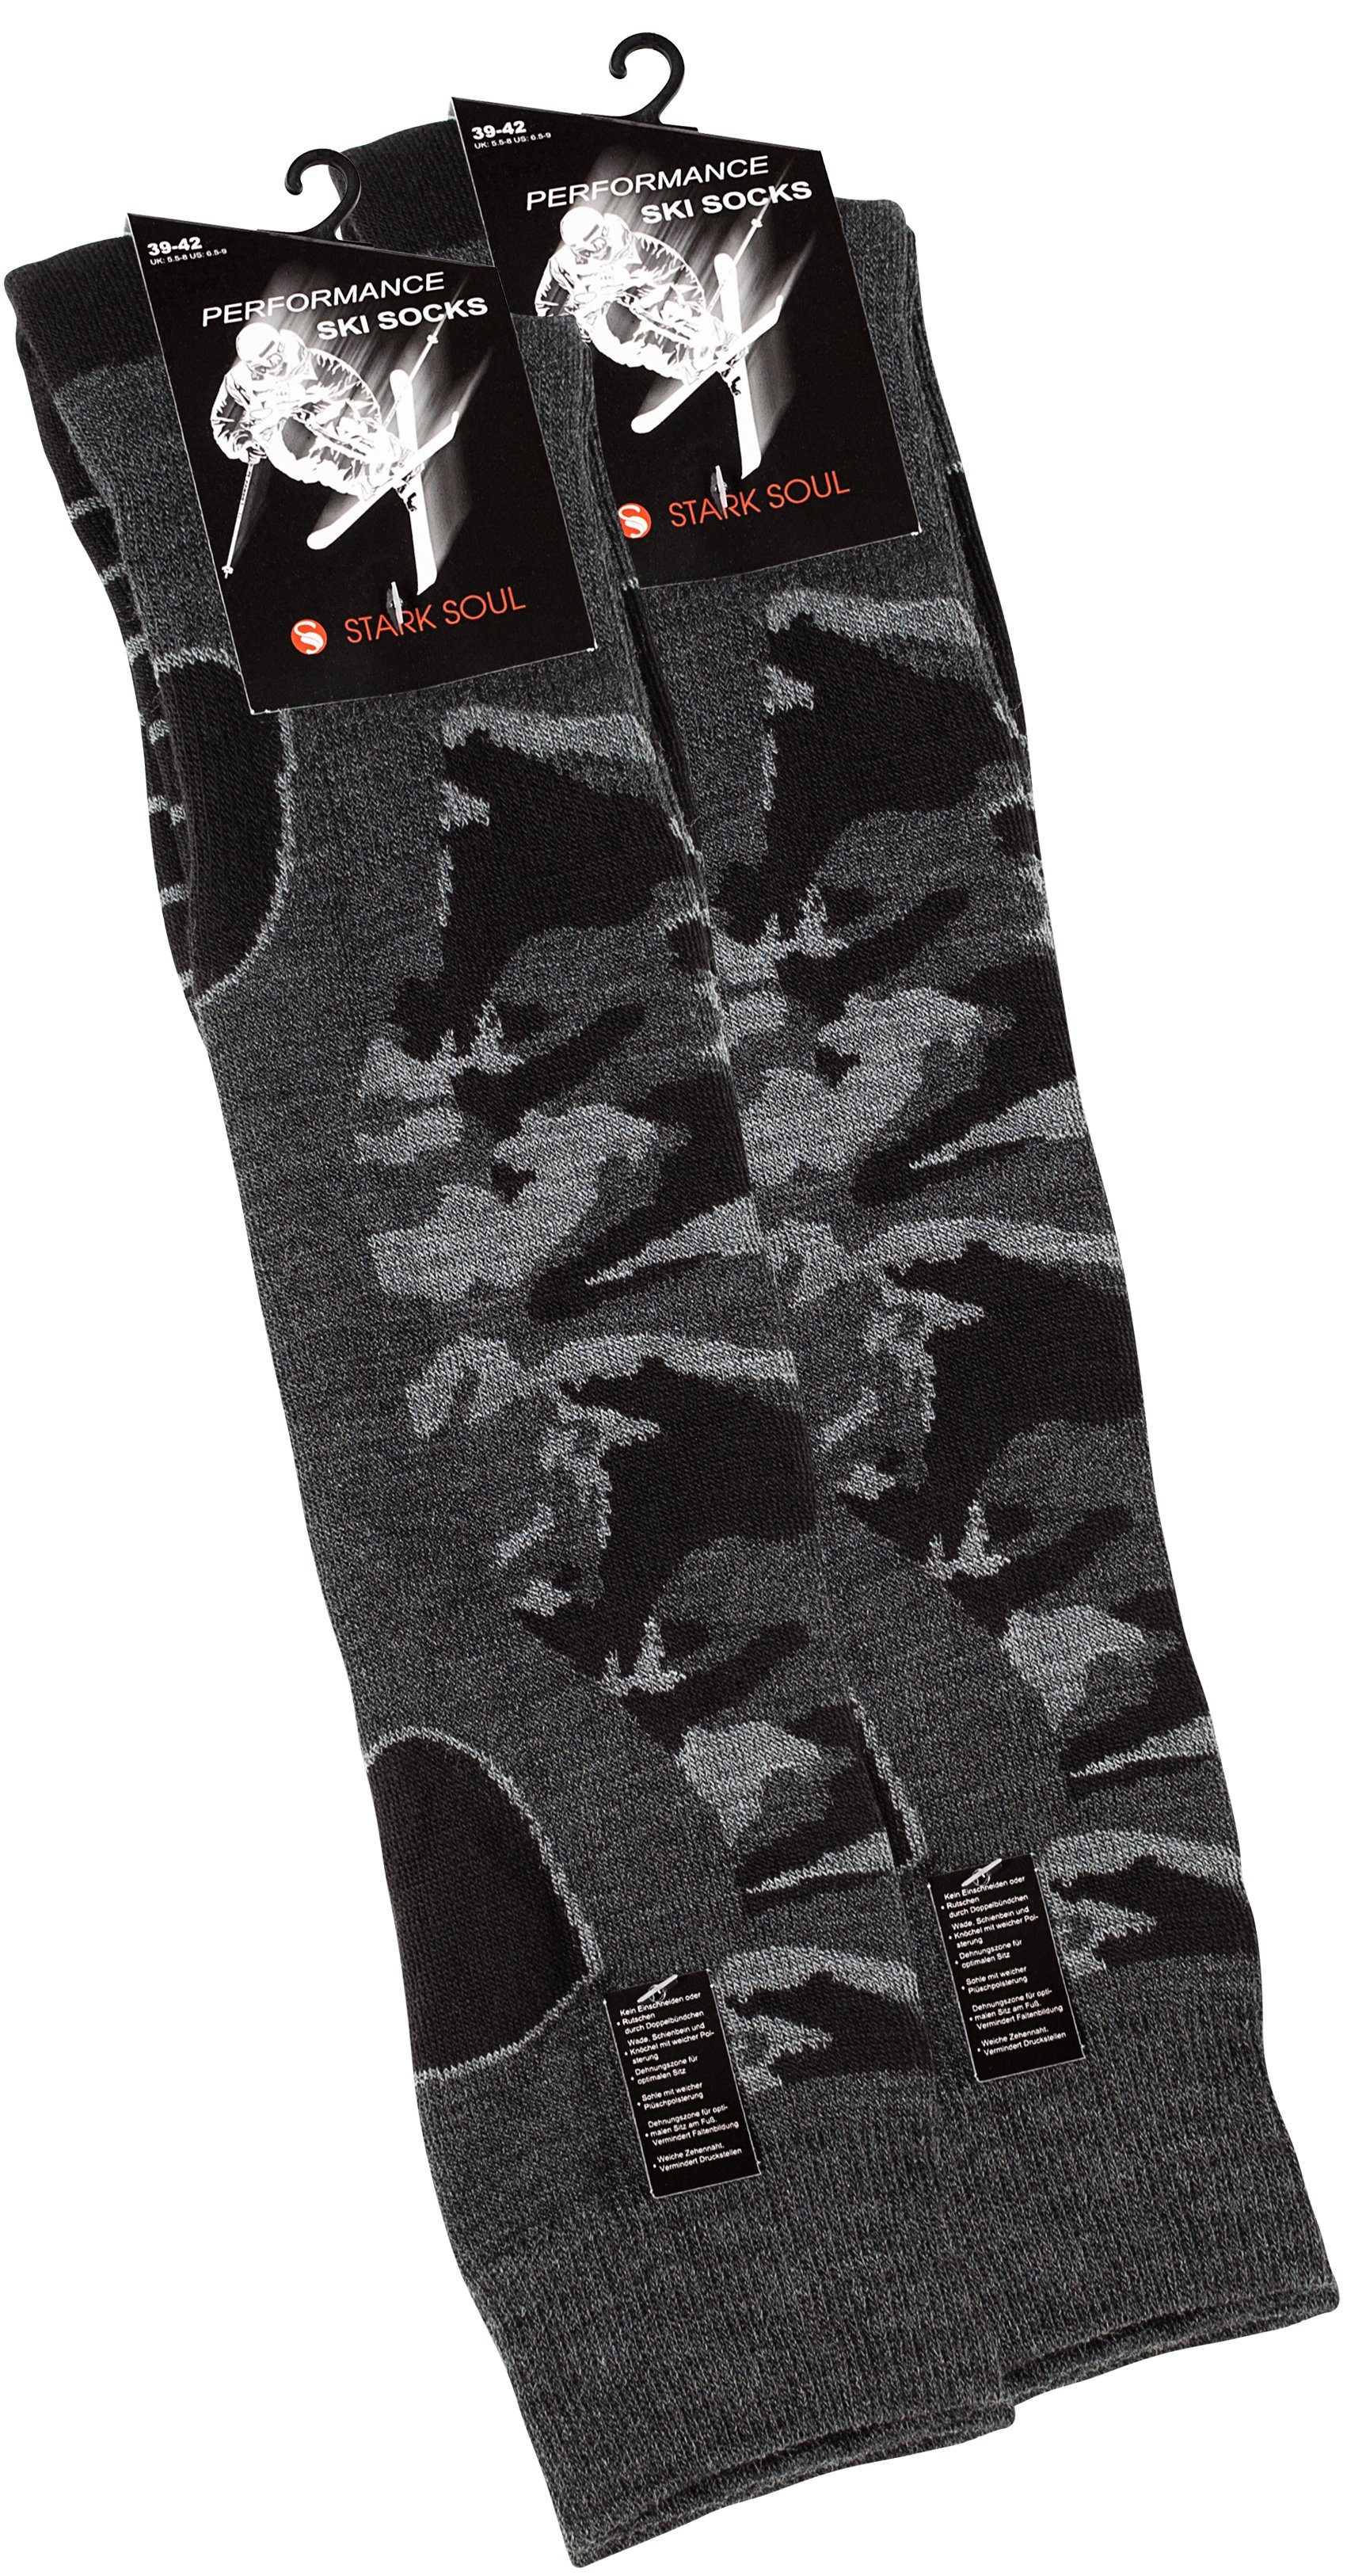 Paar Stark Snowboard Paar Socken Camouflage, & Skisocken - 2 Soul® 2 Skisocken